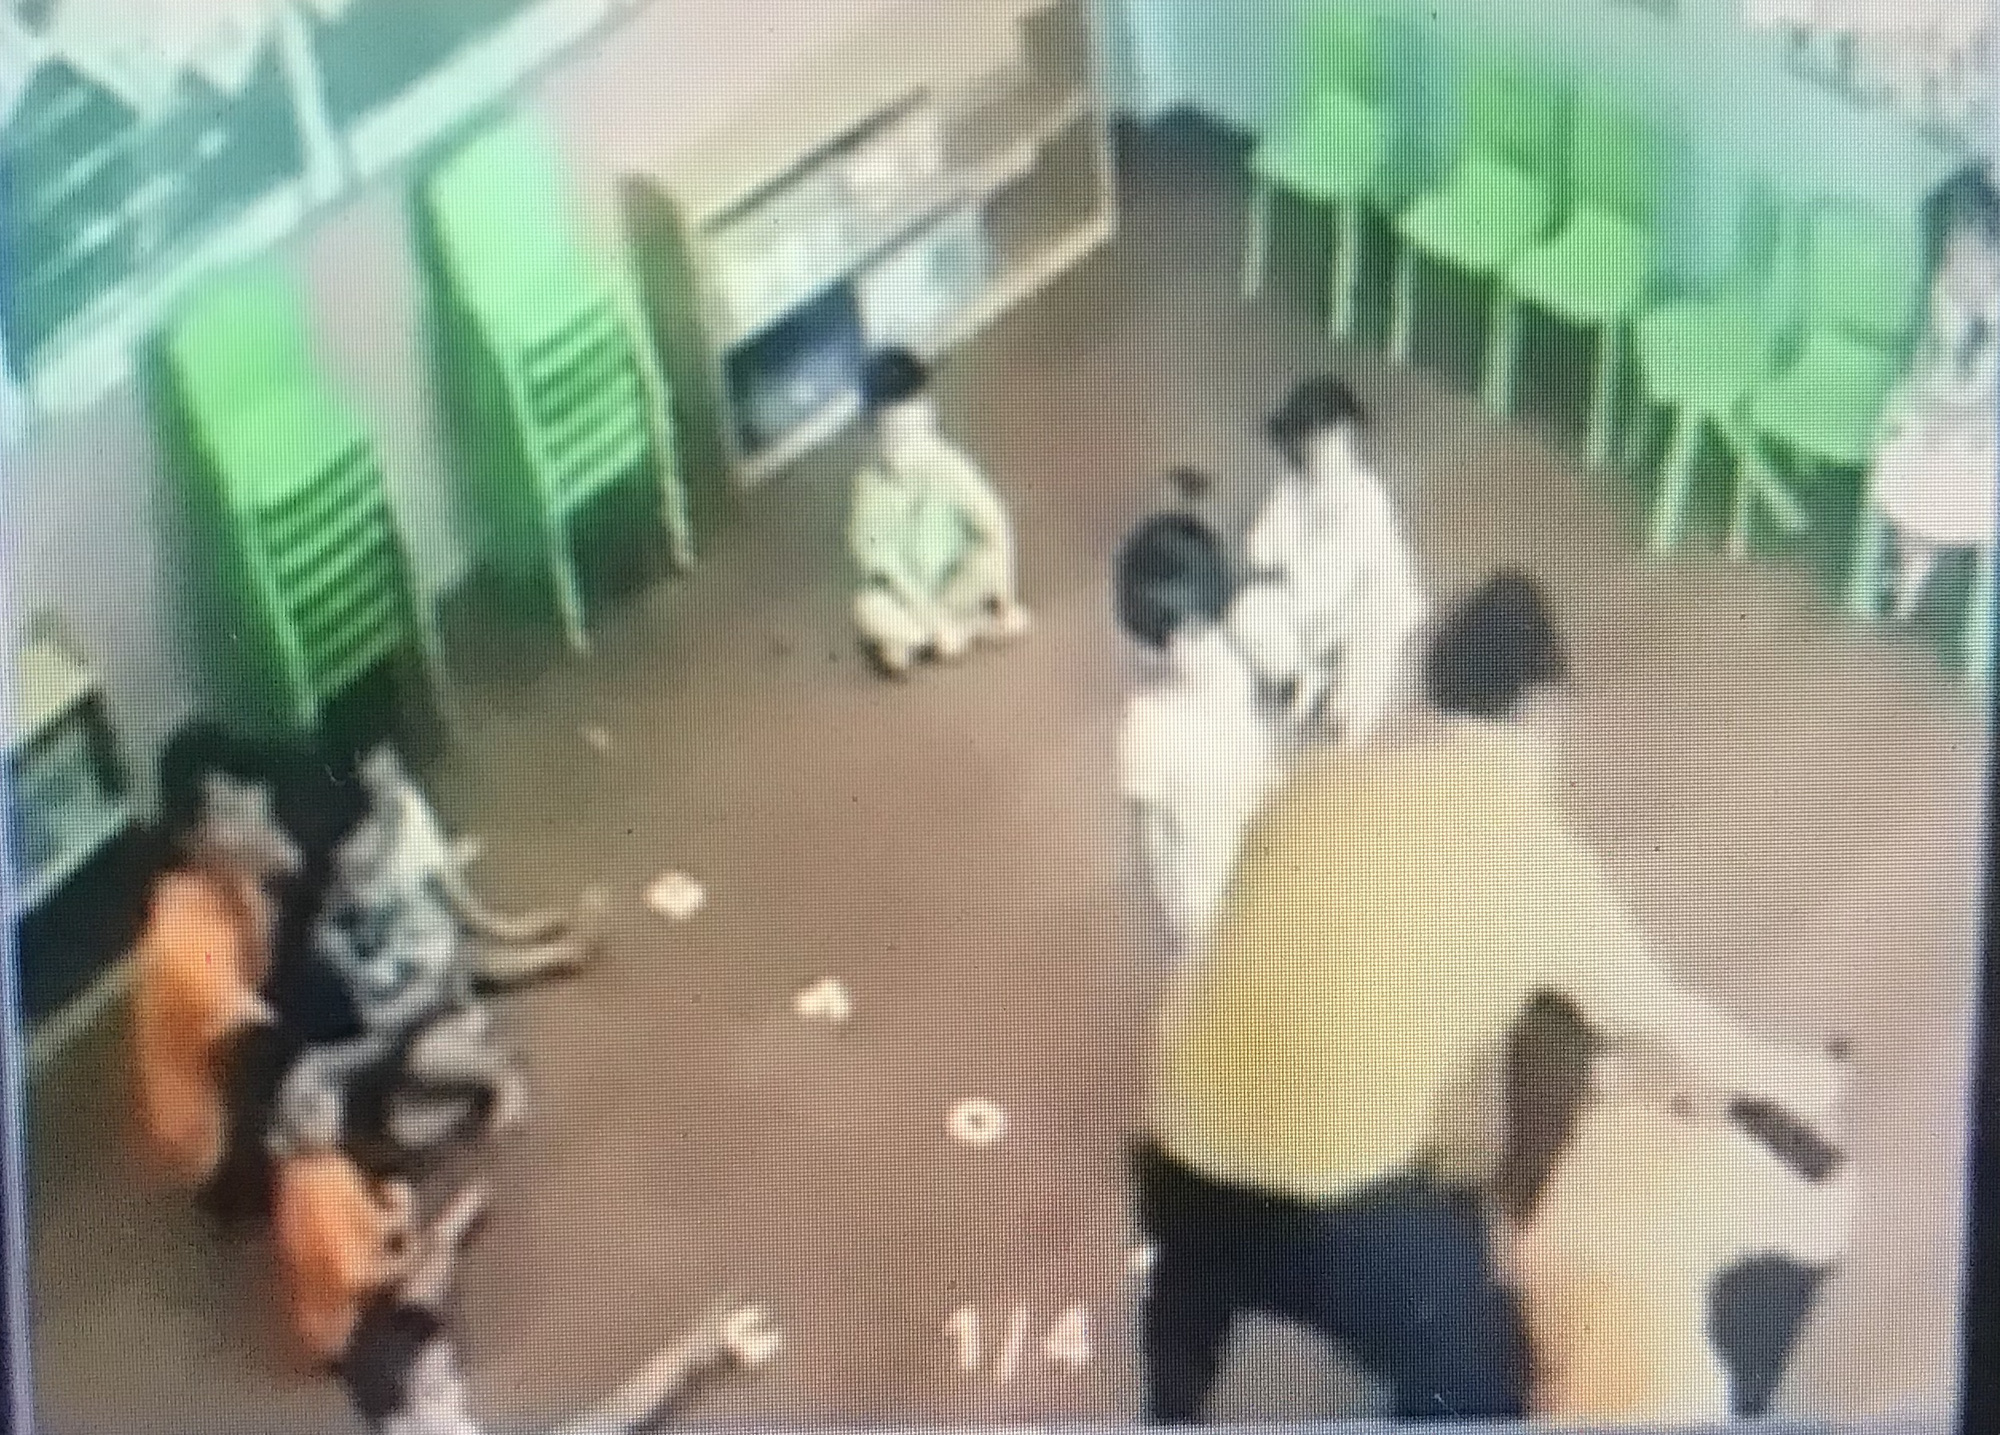 Man filmed hitting 2-year-old girl at kindergarten in Vietnam